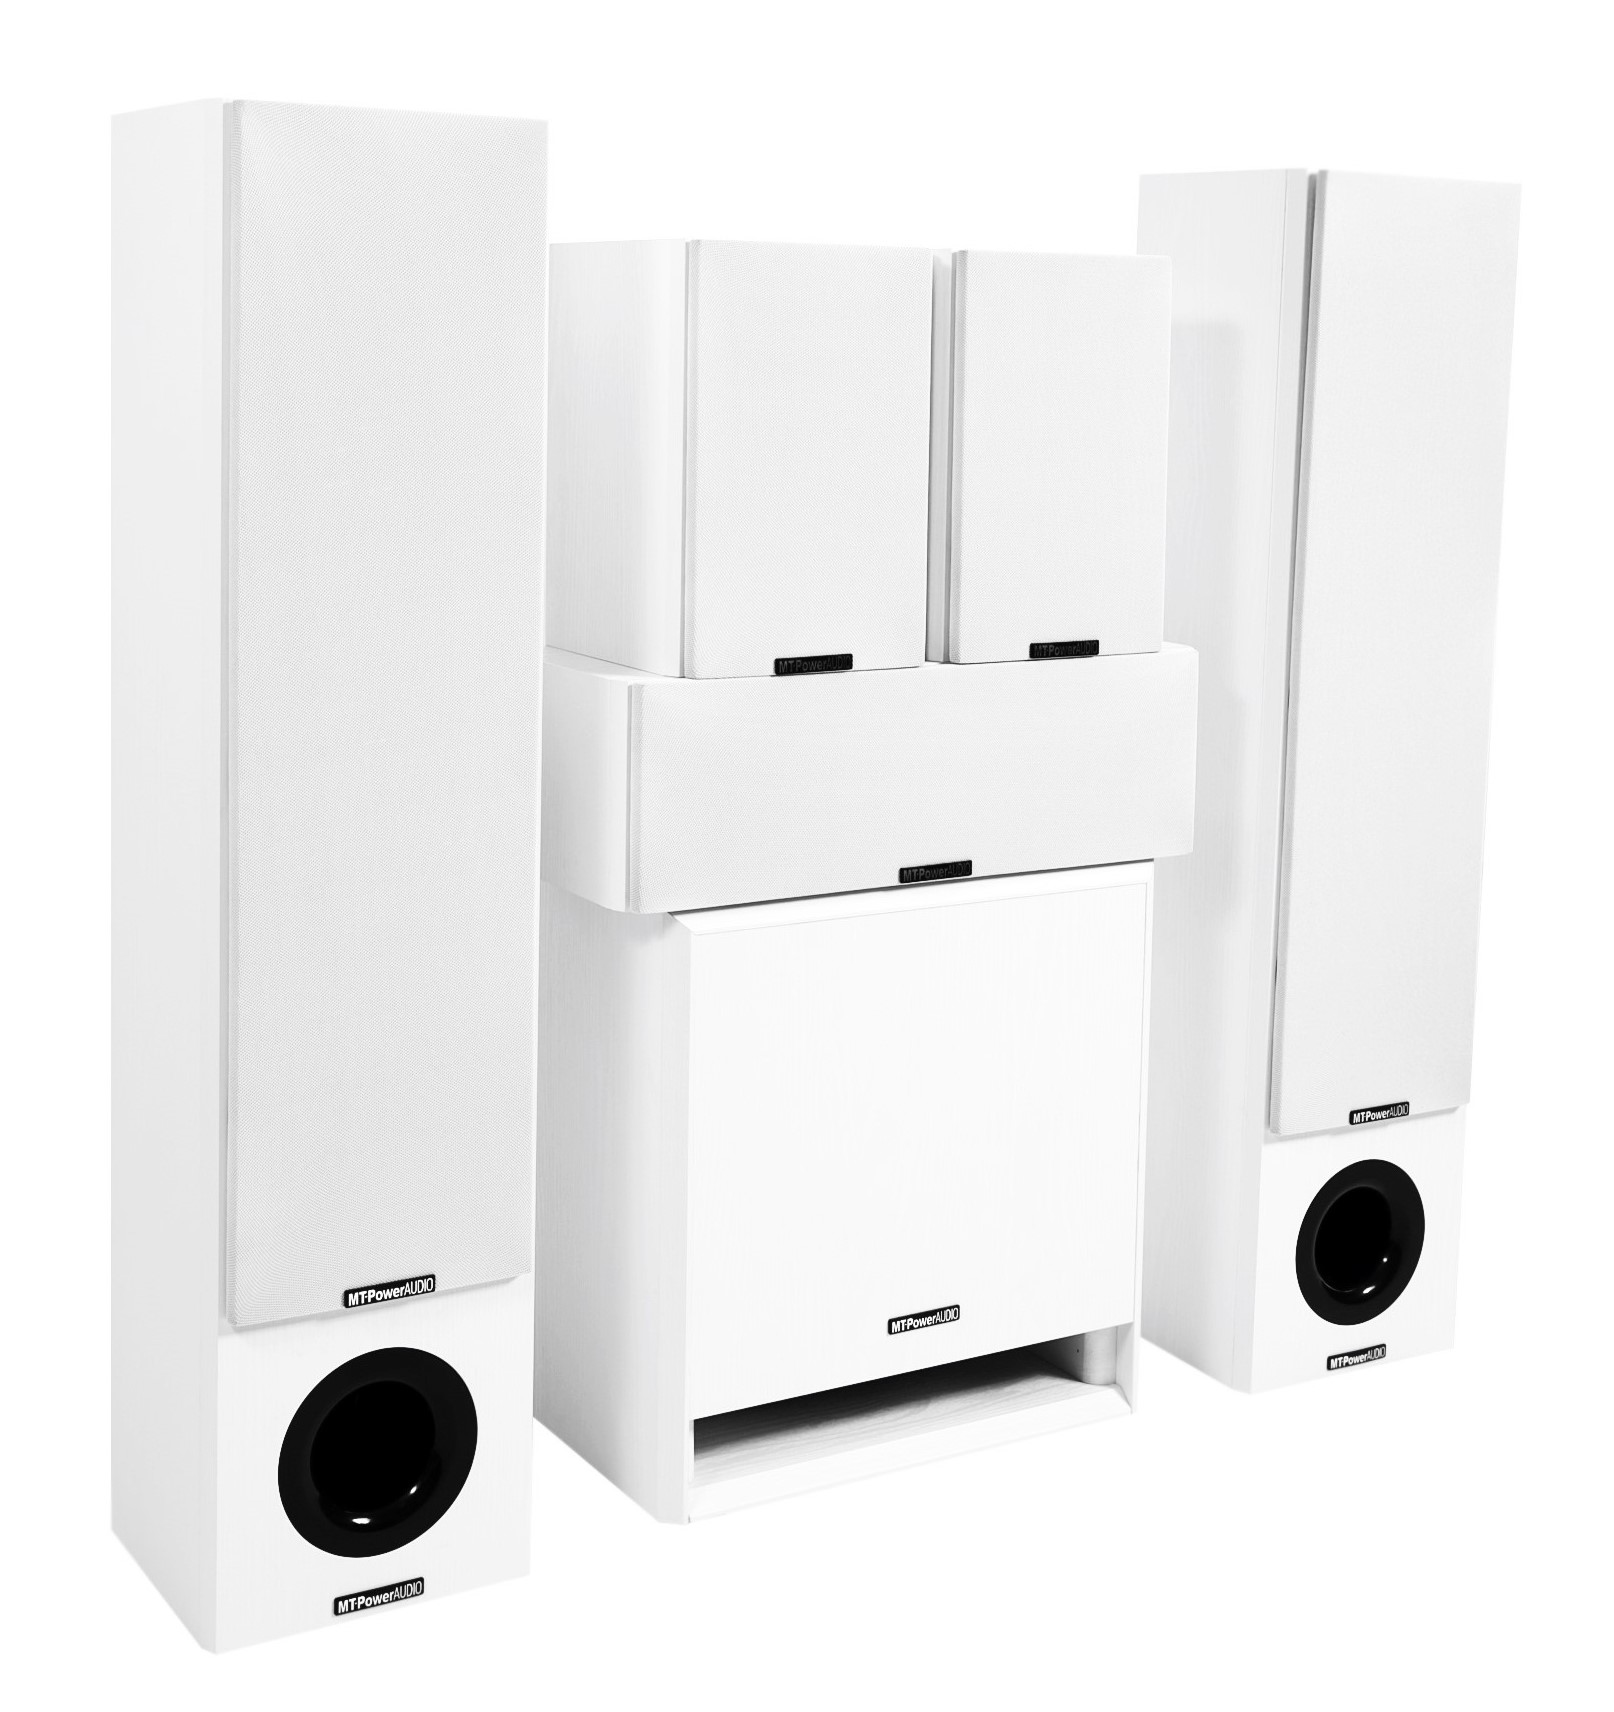 Комплекты акустики 5.1 MT-Power Performance white set 5.1 (white grills) комплекты акустики 5 1 mt power elegance 2 white set 5 1